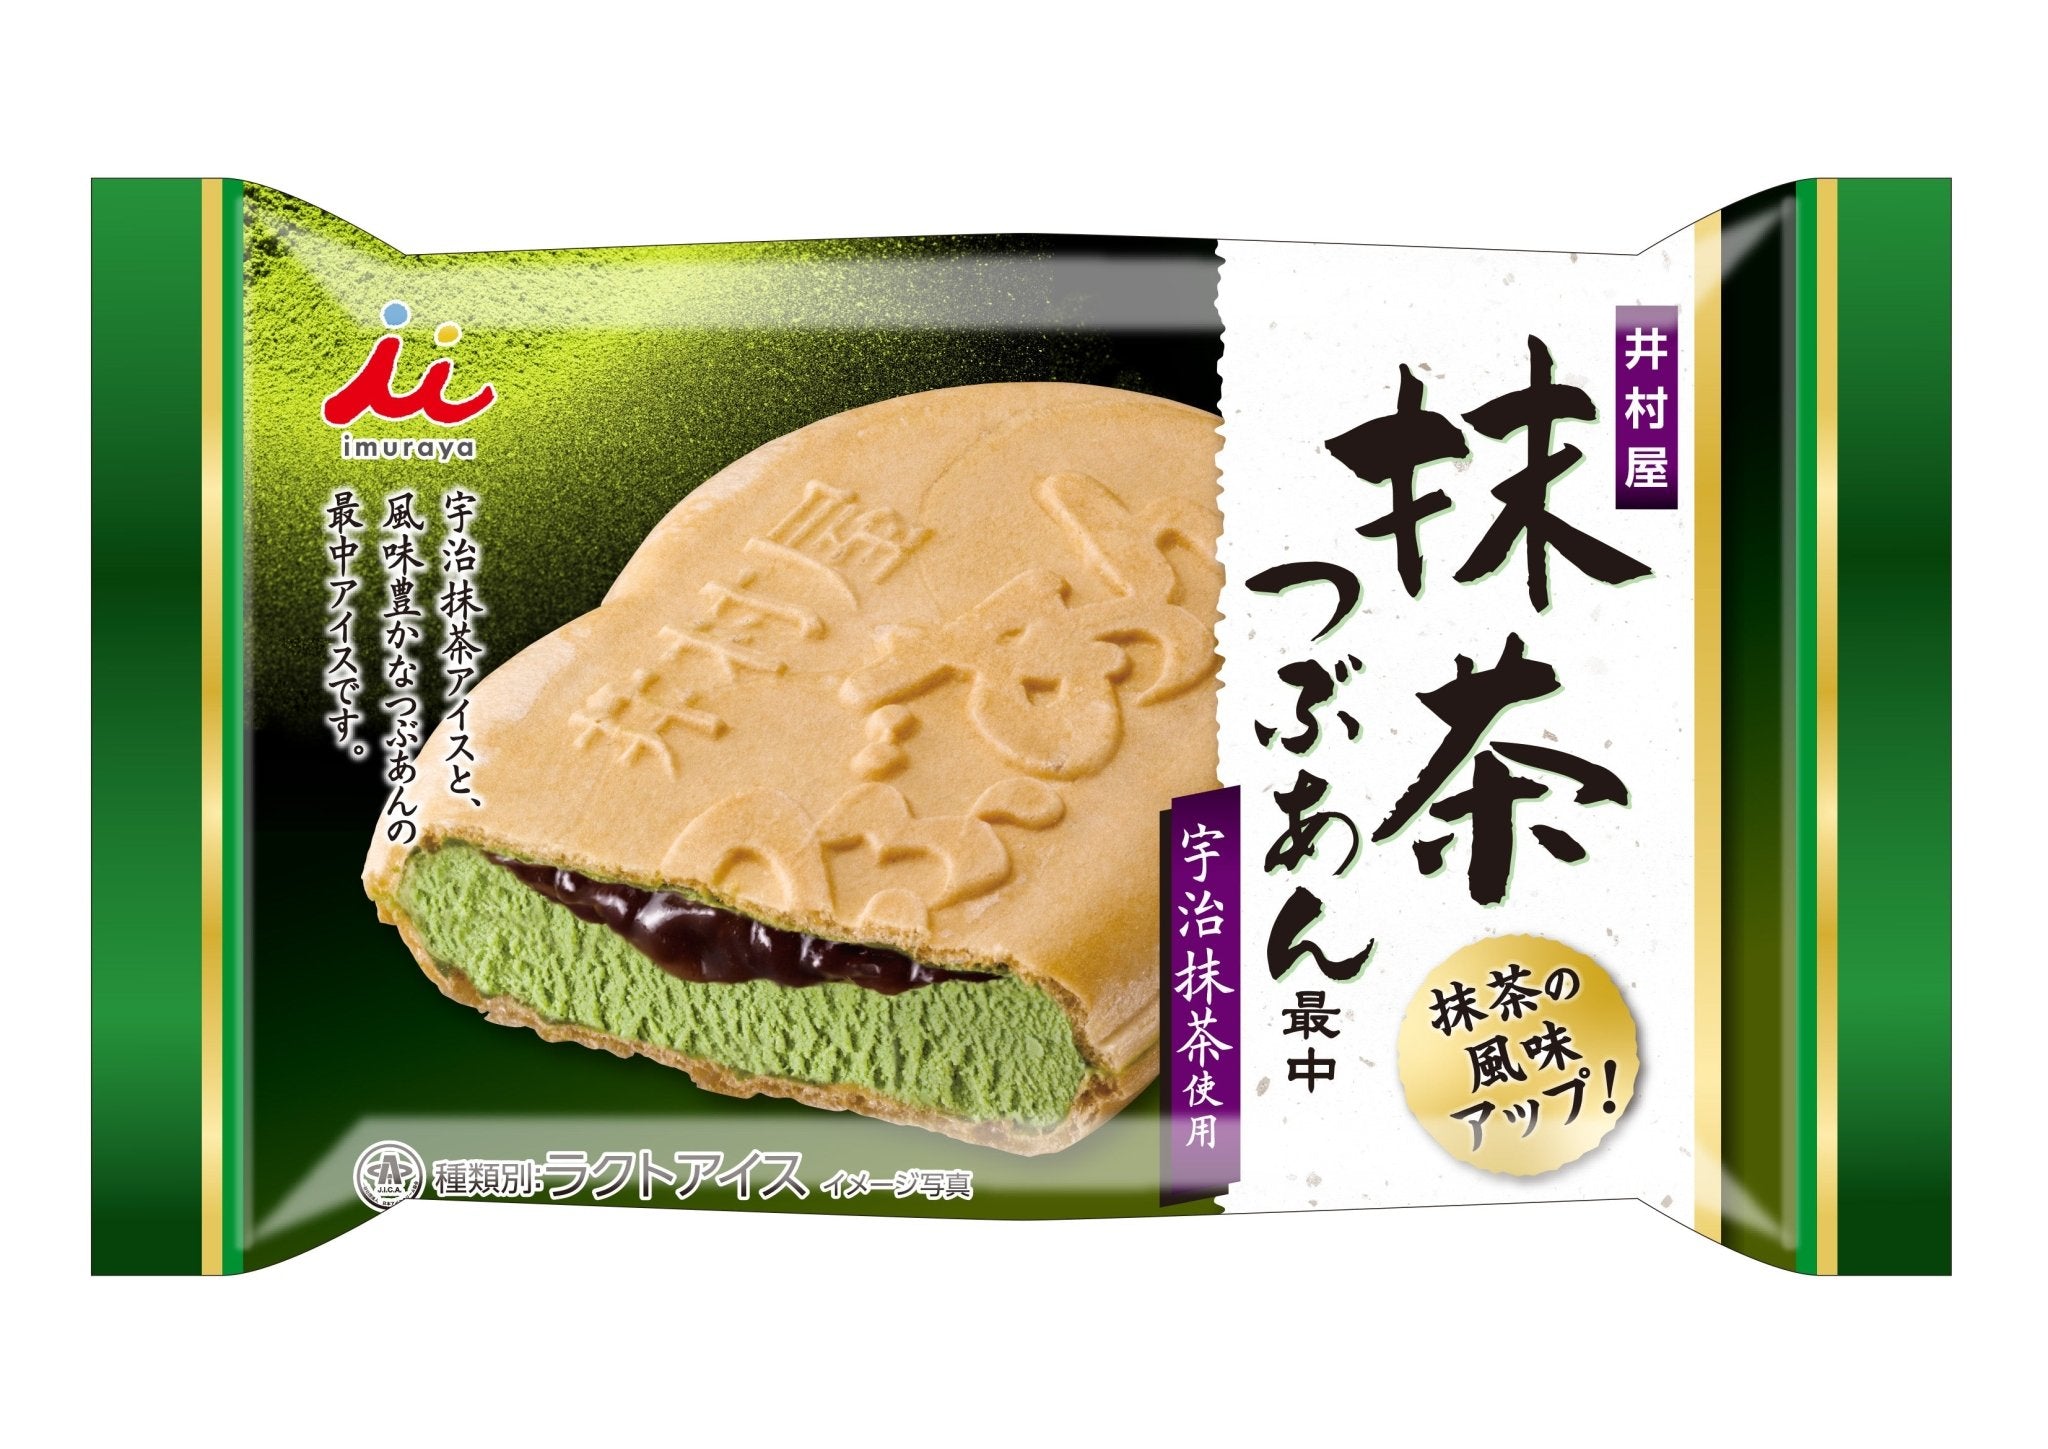 IMURAYA Matcha Red Bean Wafer Ice Cream - Tokyo Fresh Direct